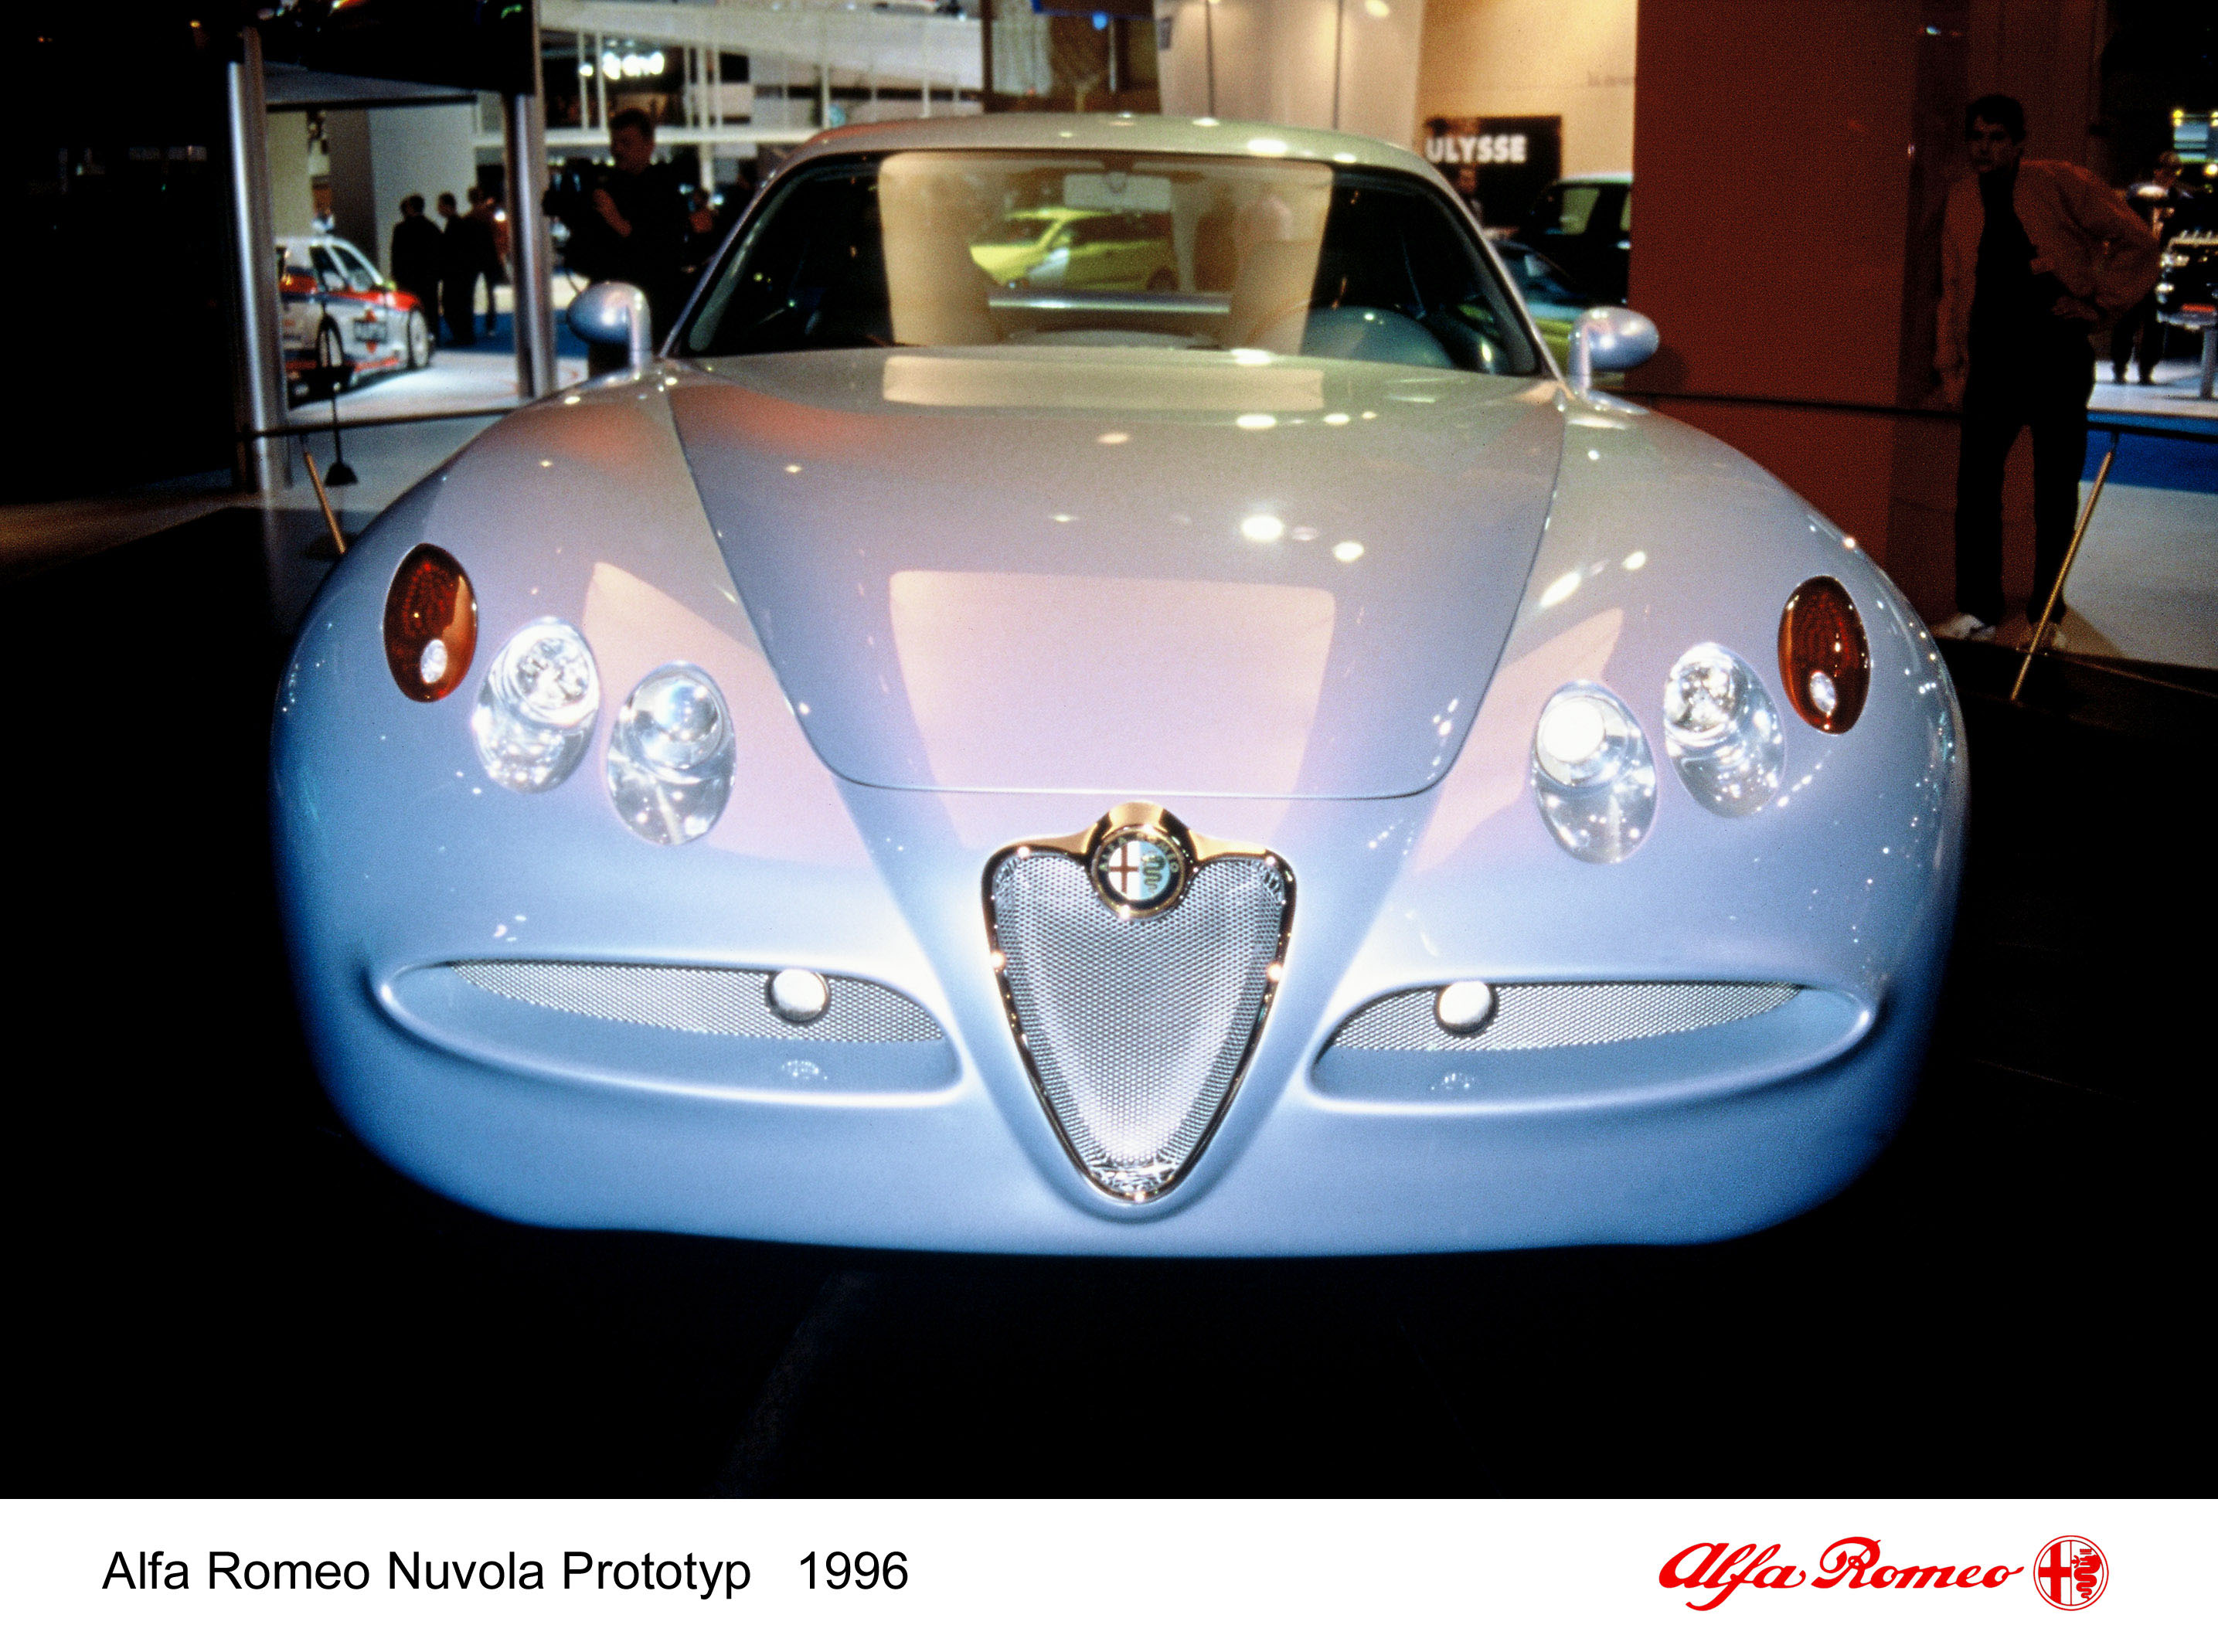 Alfa Romeo Nuvola Prototype, 1996